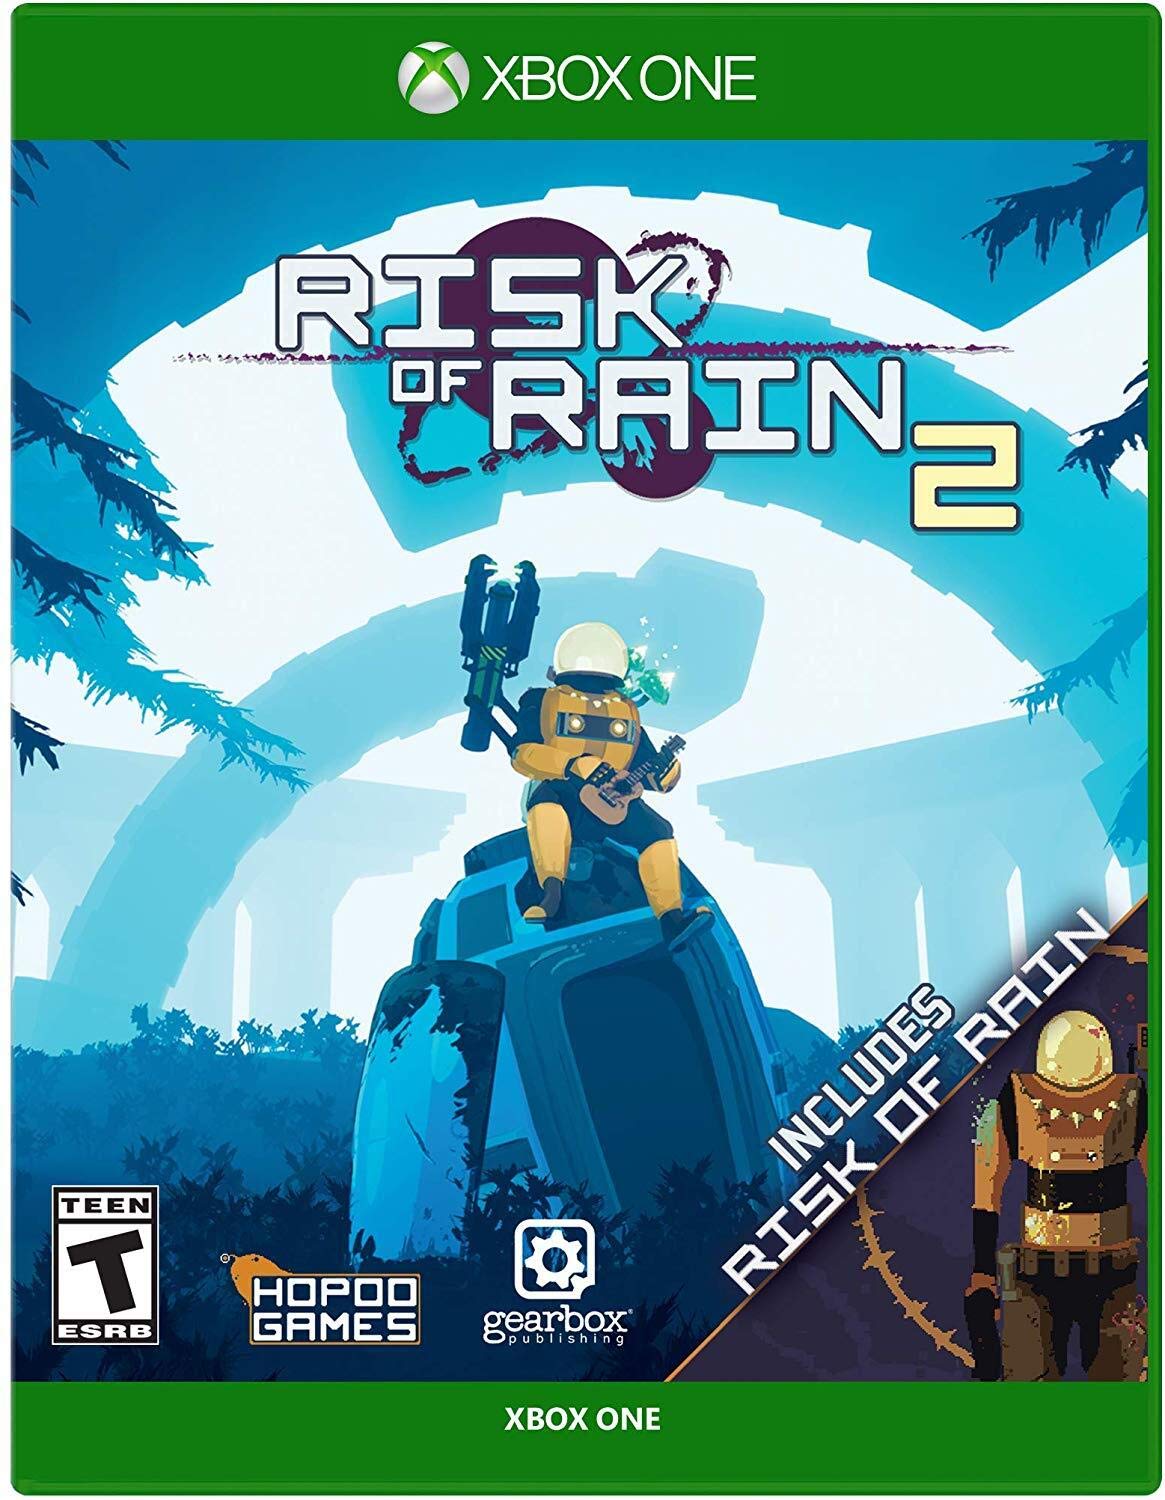 download rain world xbox for free